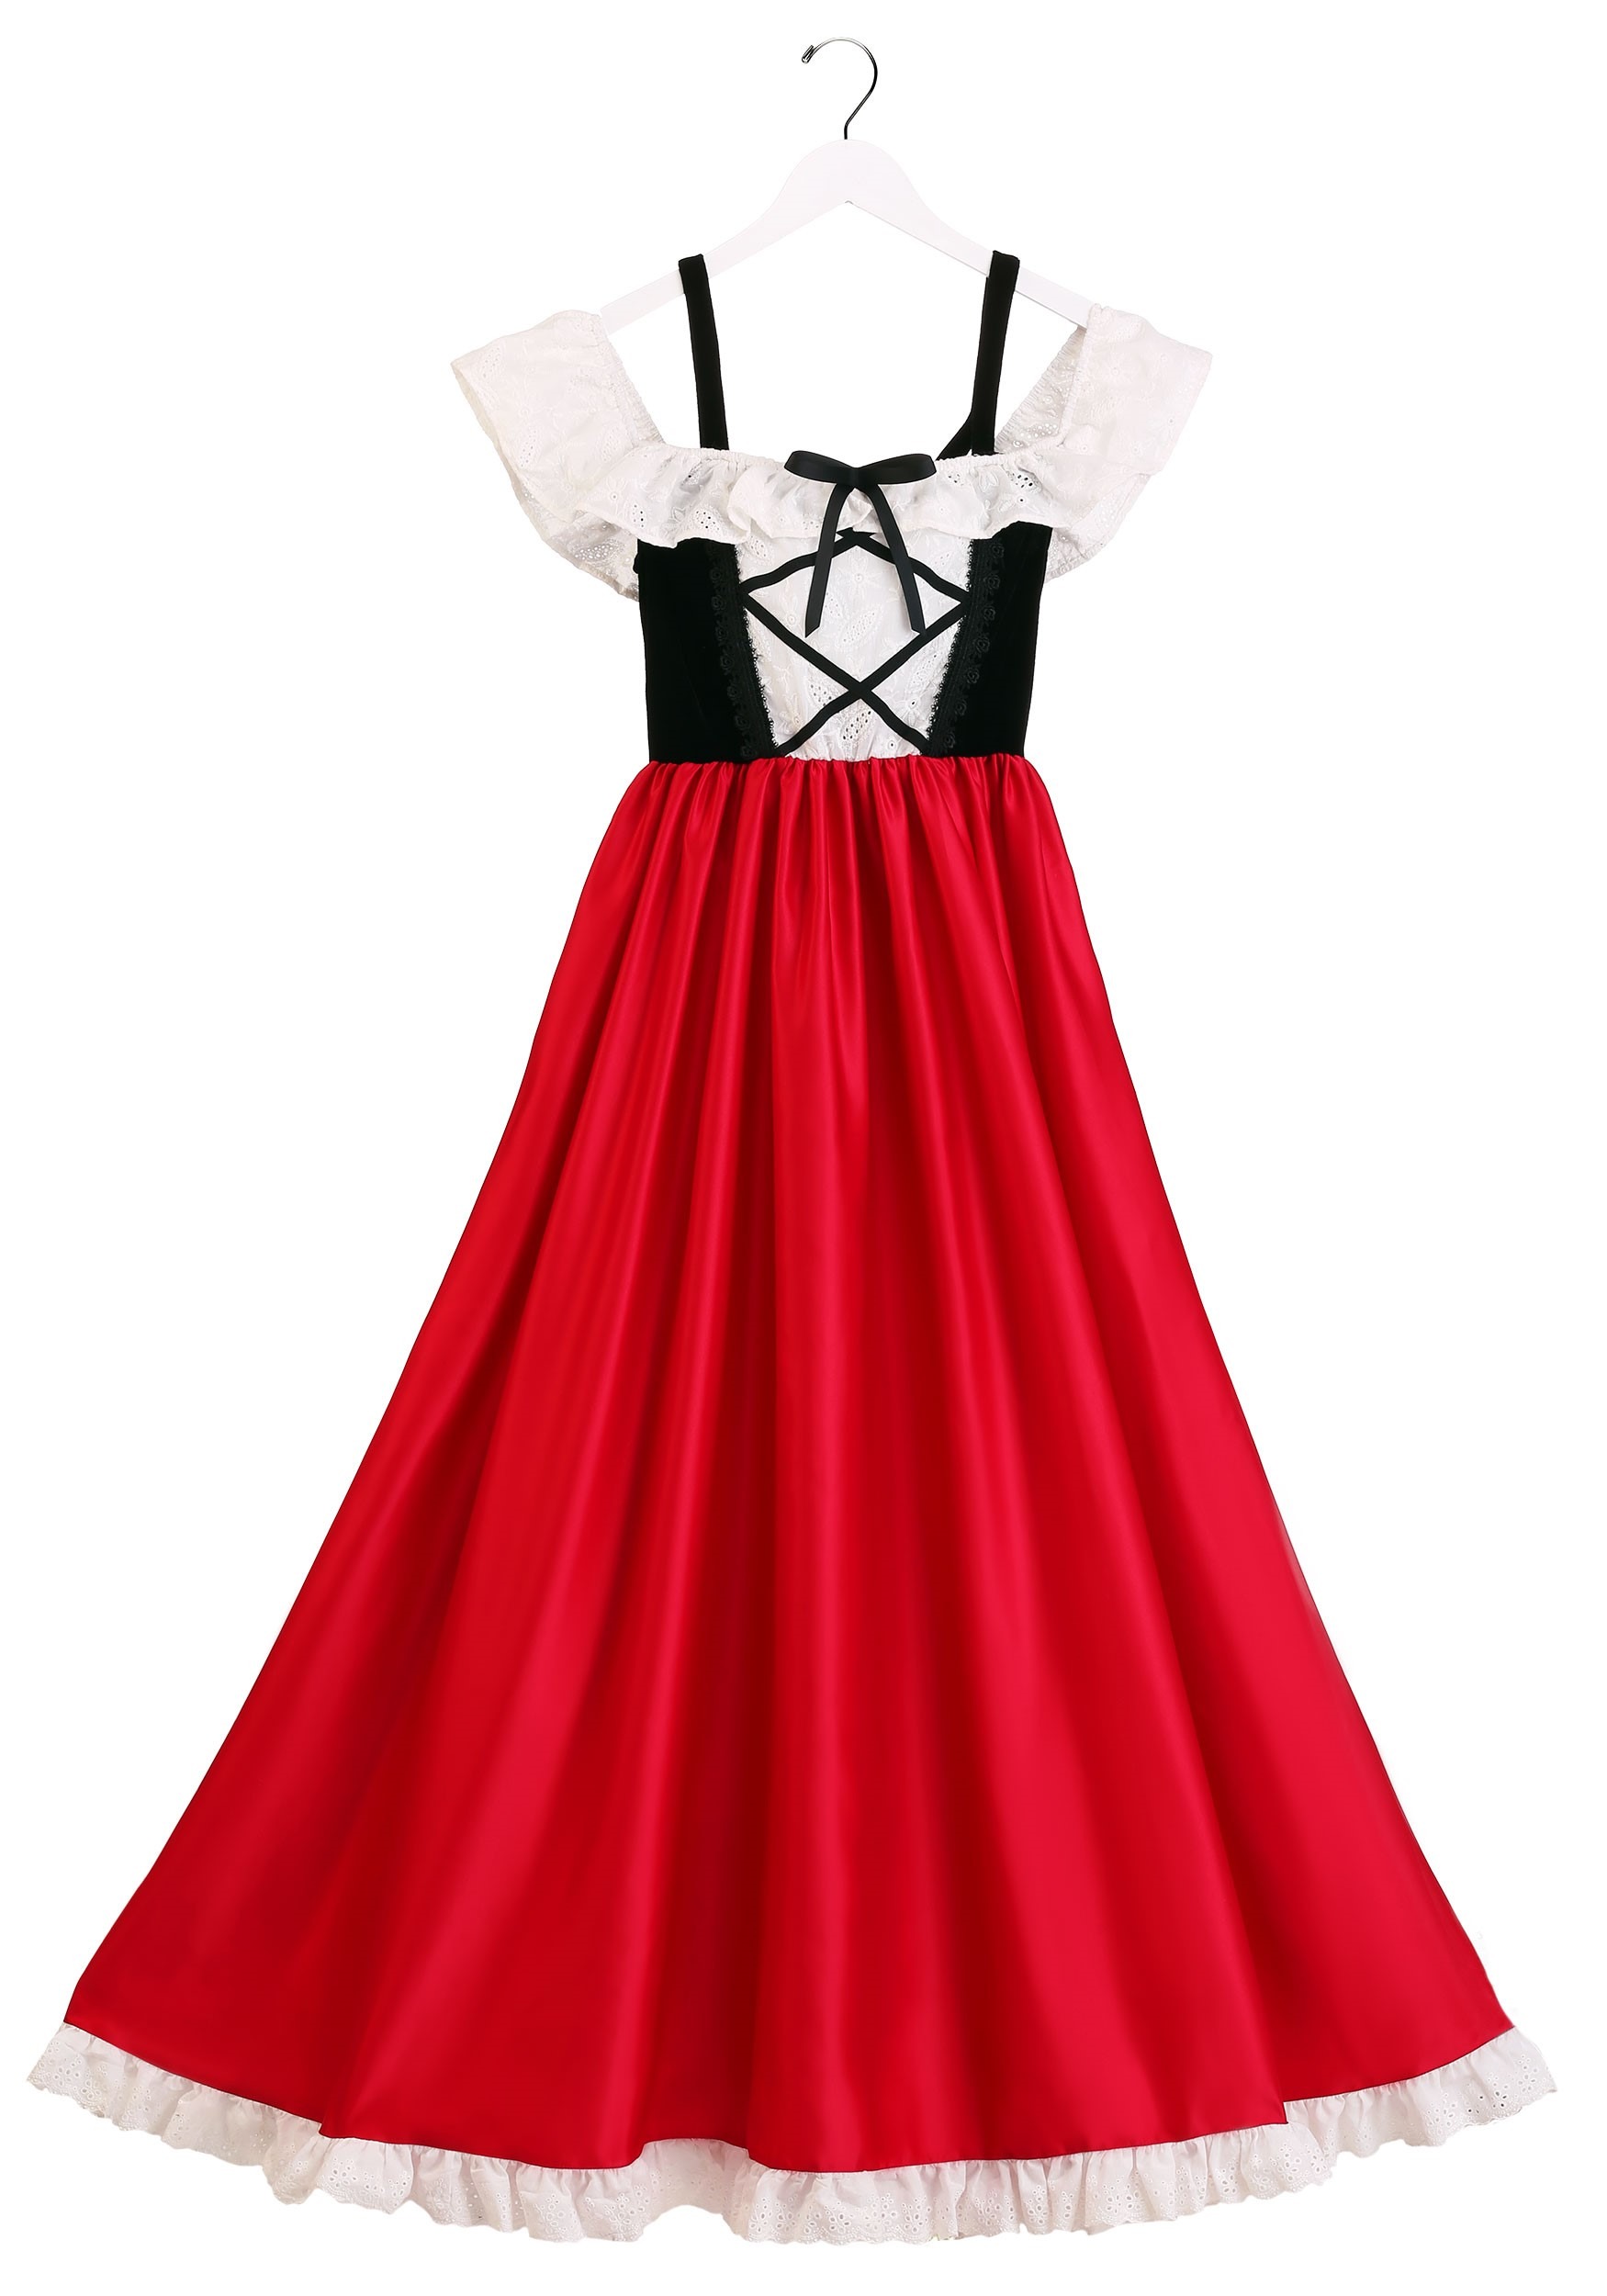 Deluxe Red Riding Hood Women's Fancy Dress Costume